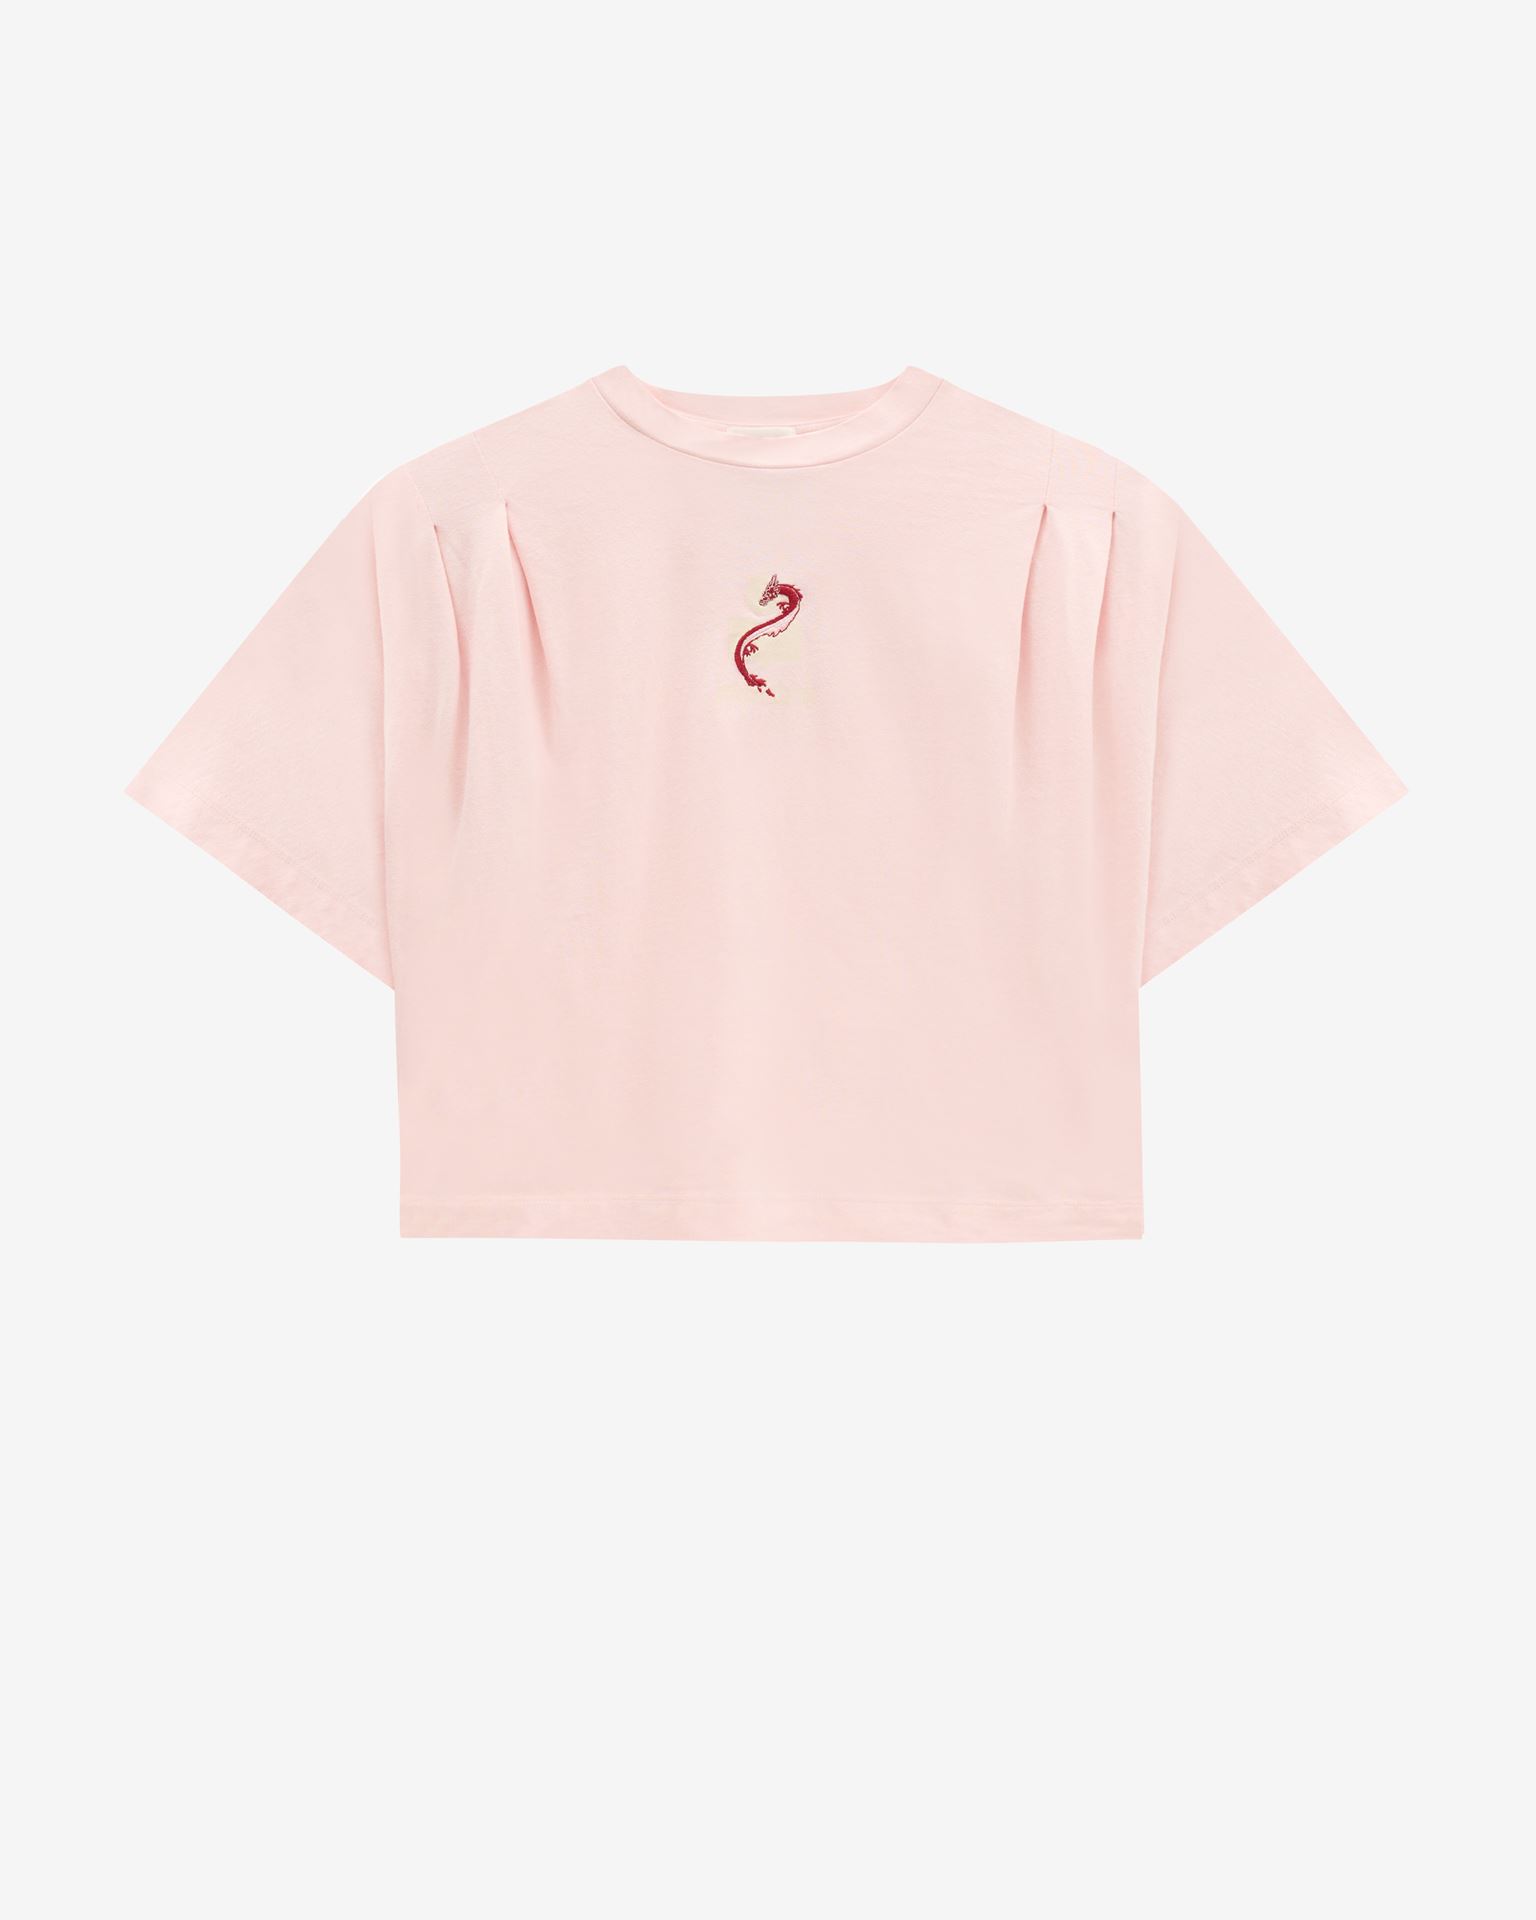 Isabel Marant Marant Étoile, Zilio Tee Shirt - Women - Pink